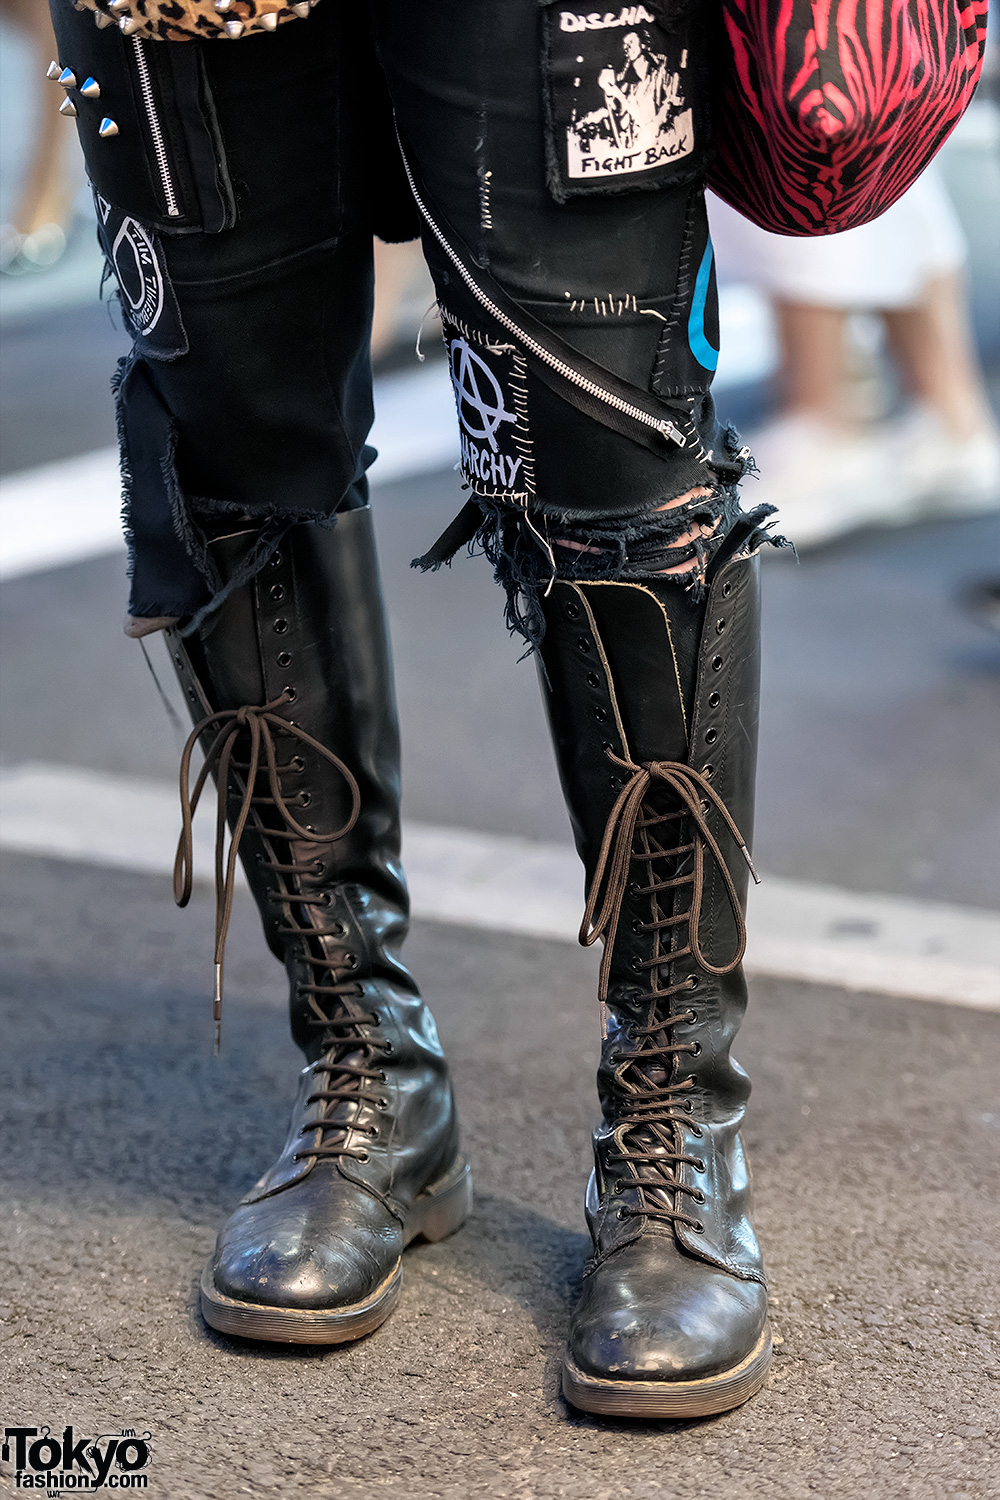 Harajuku Punk in Discocks Studded Leather Vest, Patched Denim, Dr